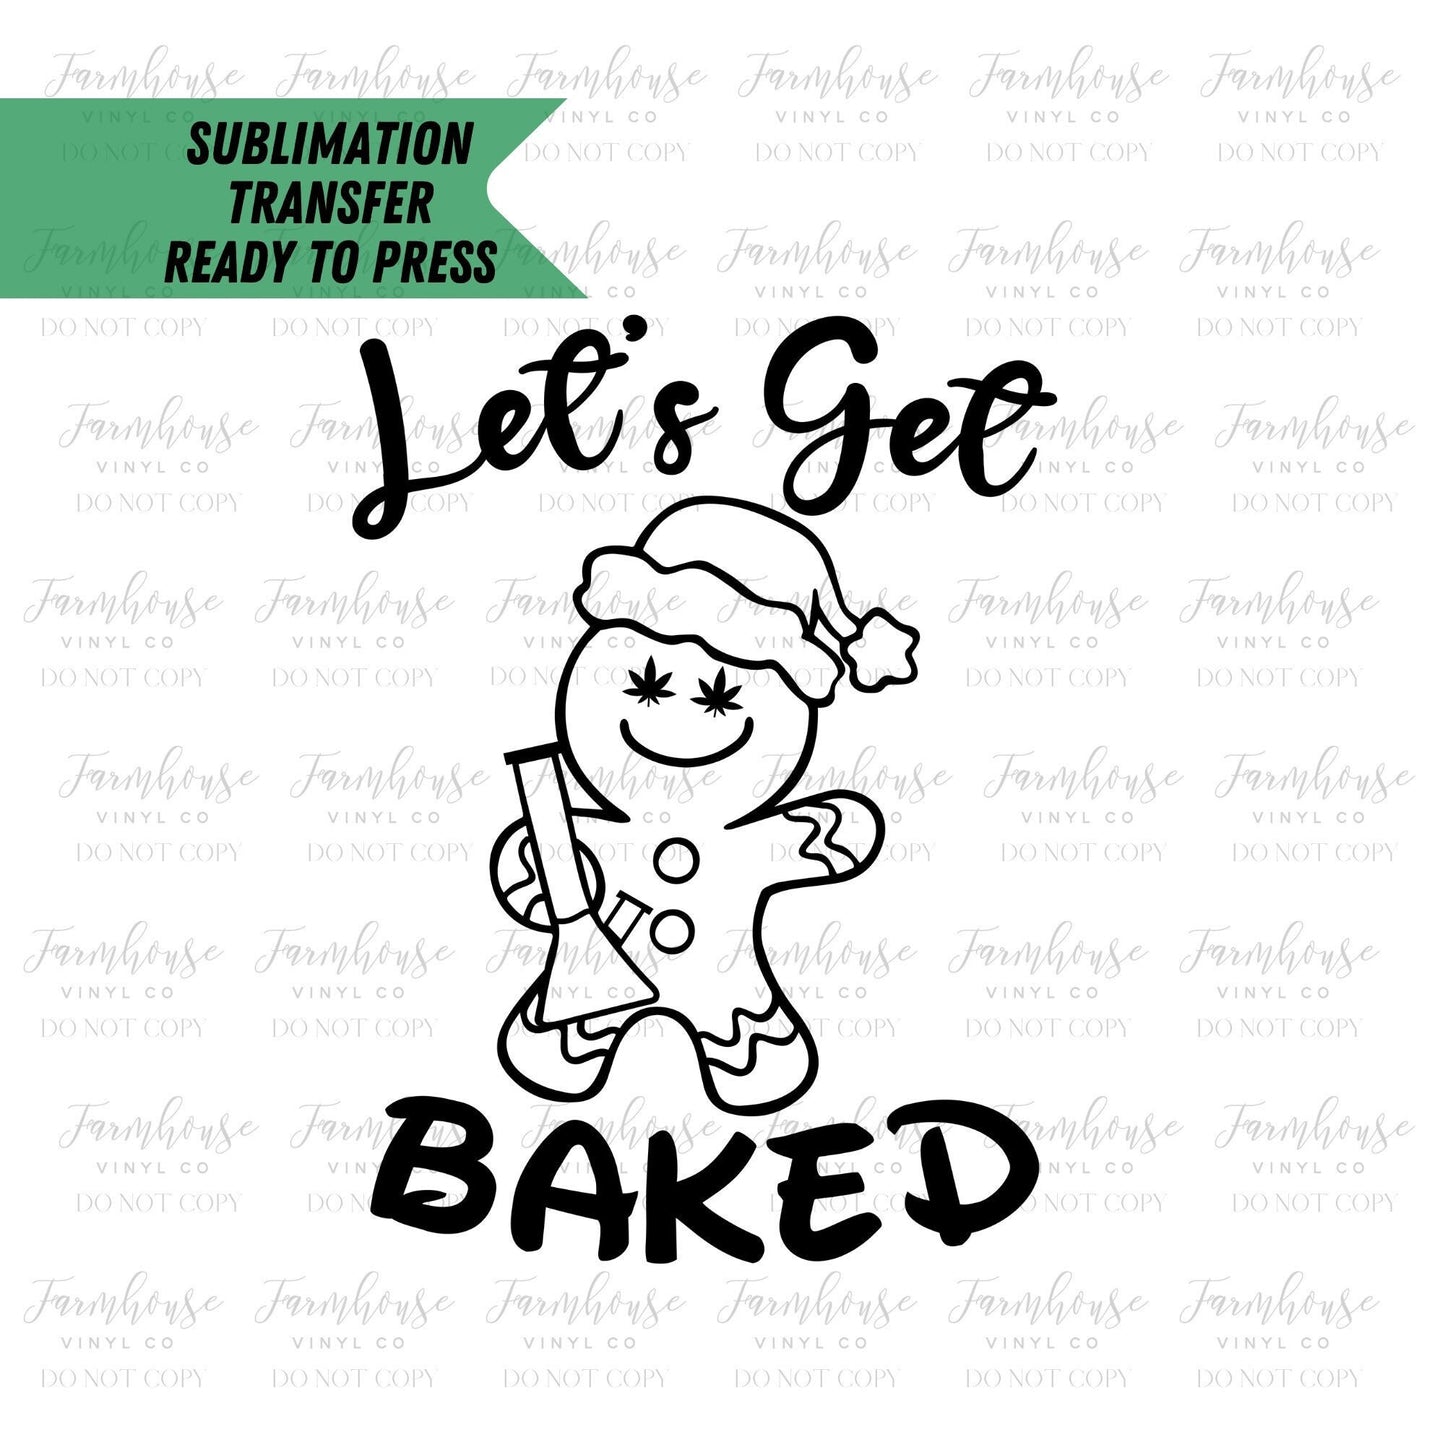 Let’s Get Baked Gingerbread Man, Smoker Sublimation Transfer, Christmas Cookie Design, Sublimation Transfer Ready Press, Xmas Heat Design - Farmhouse Vinyl Co